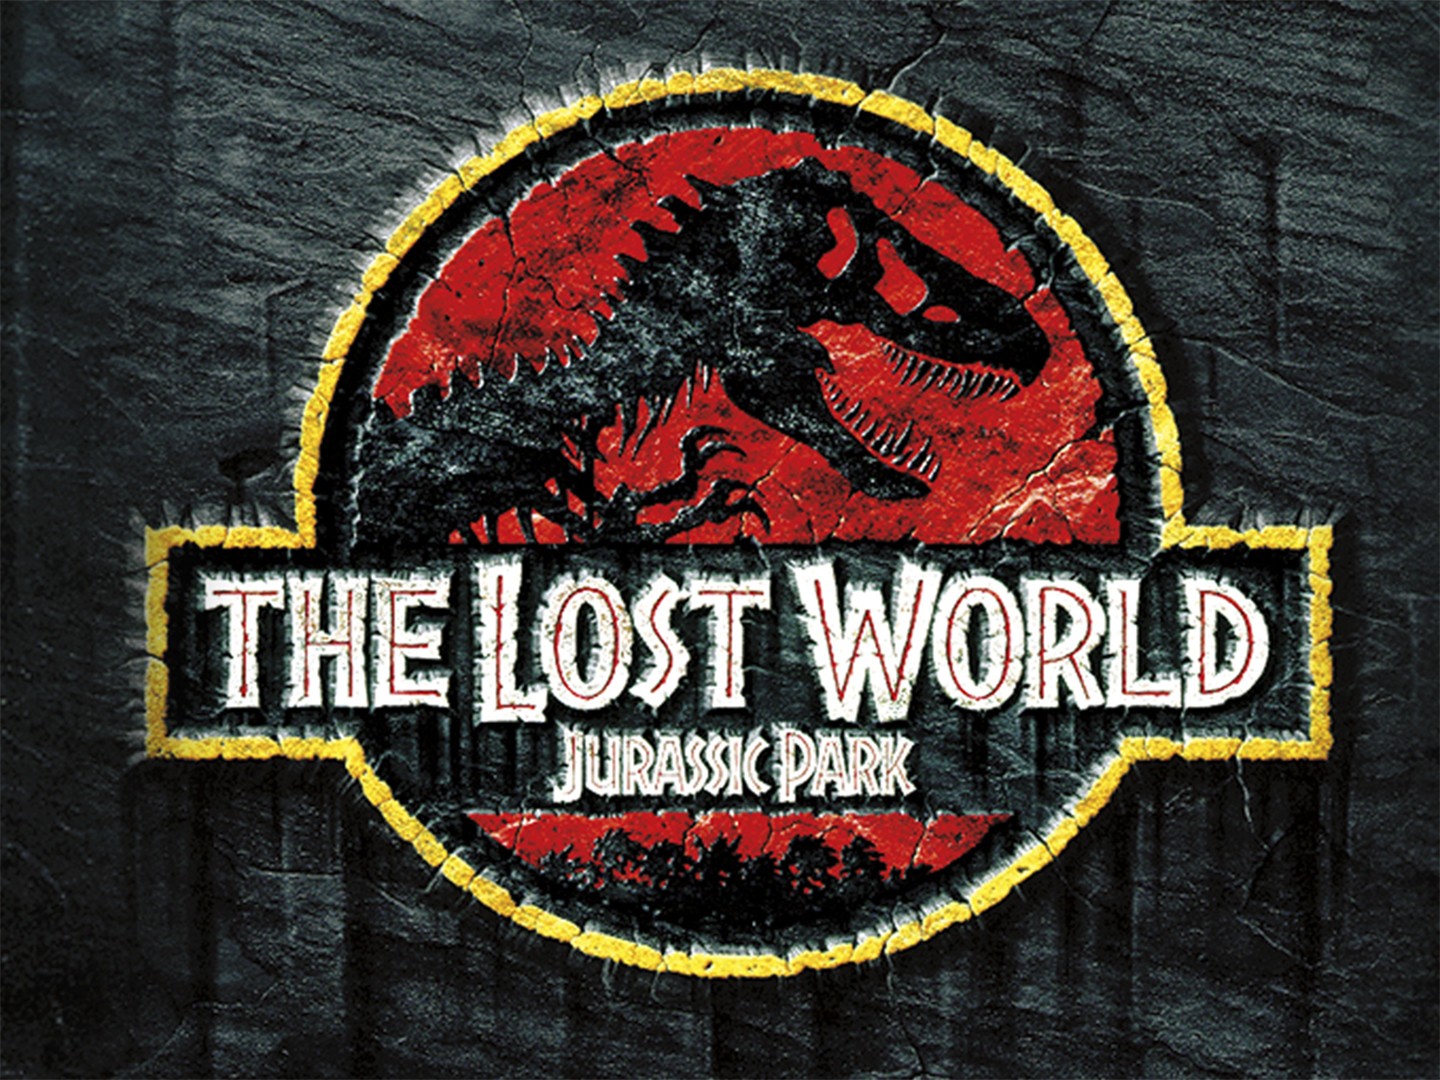 Jurassic Park/World